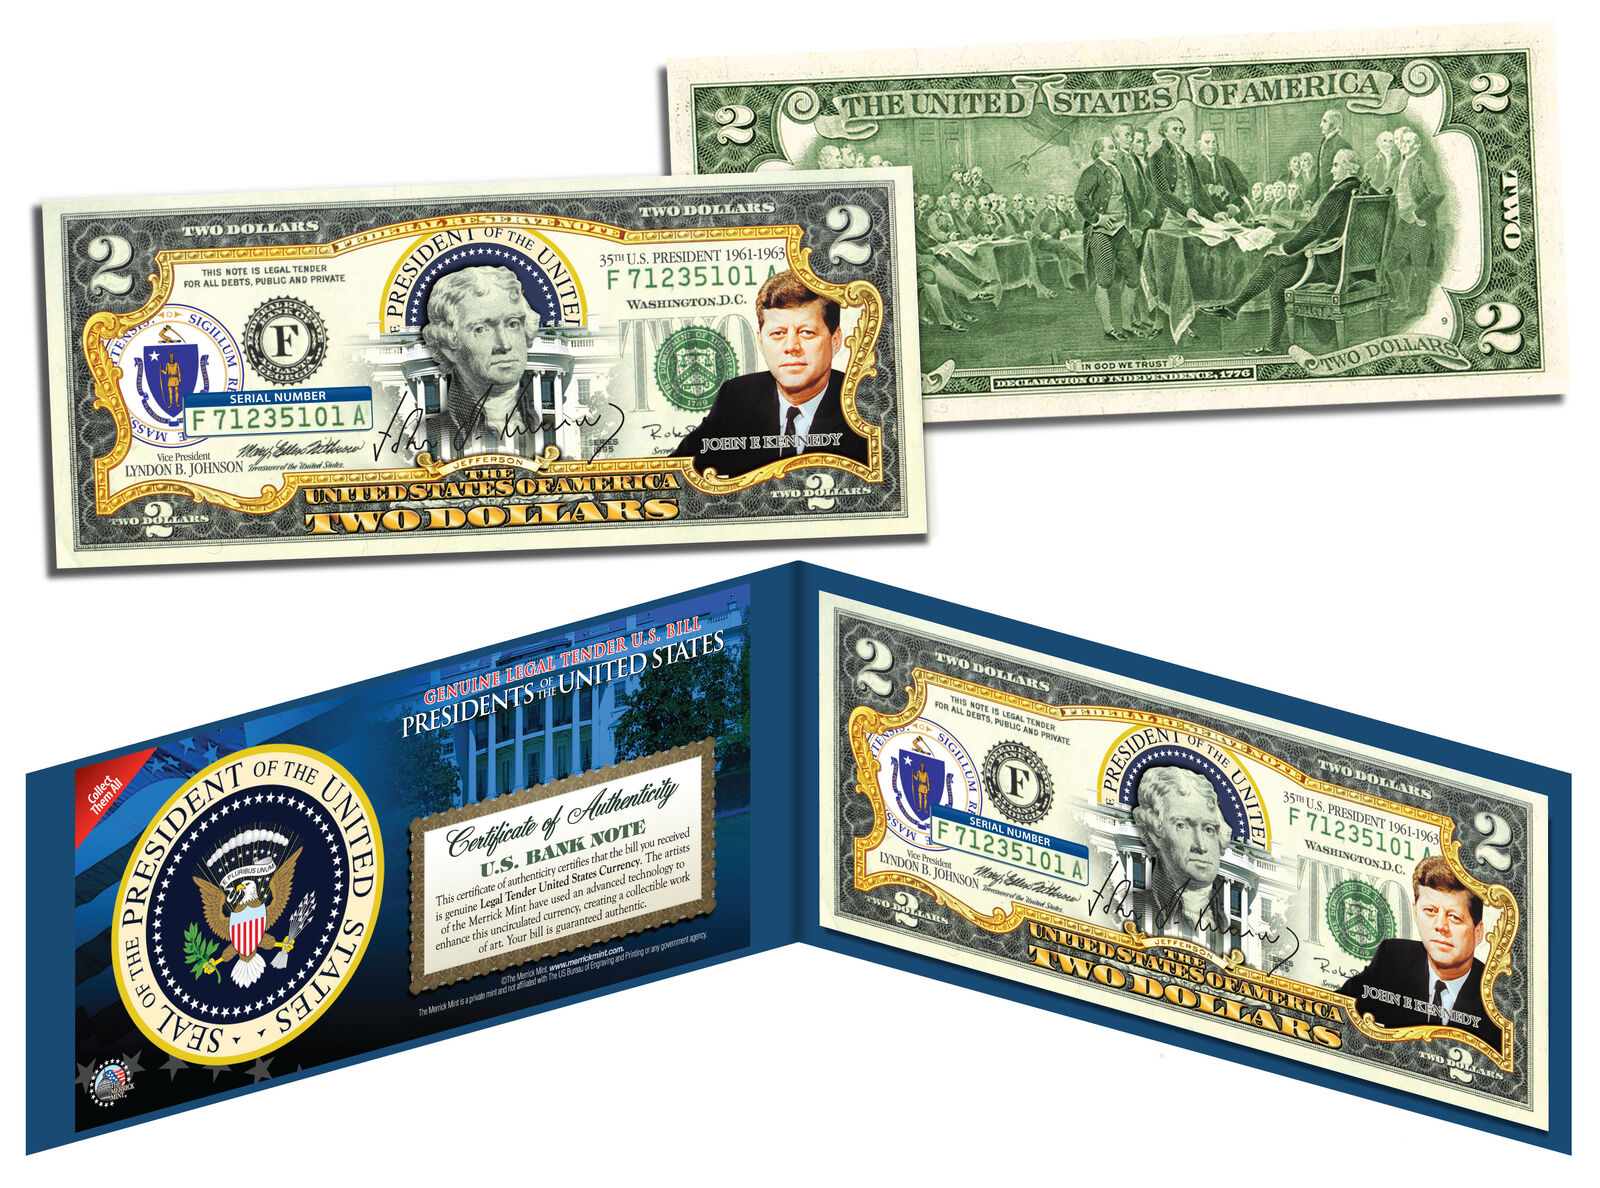 JOHN F KENNEDY * 35th U.S. President * Colorized $2 Bill US Genuine Legal Tender